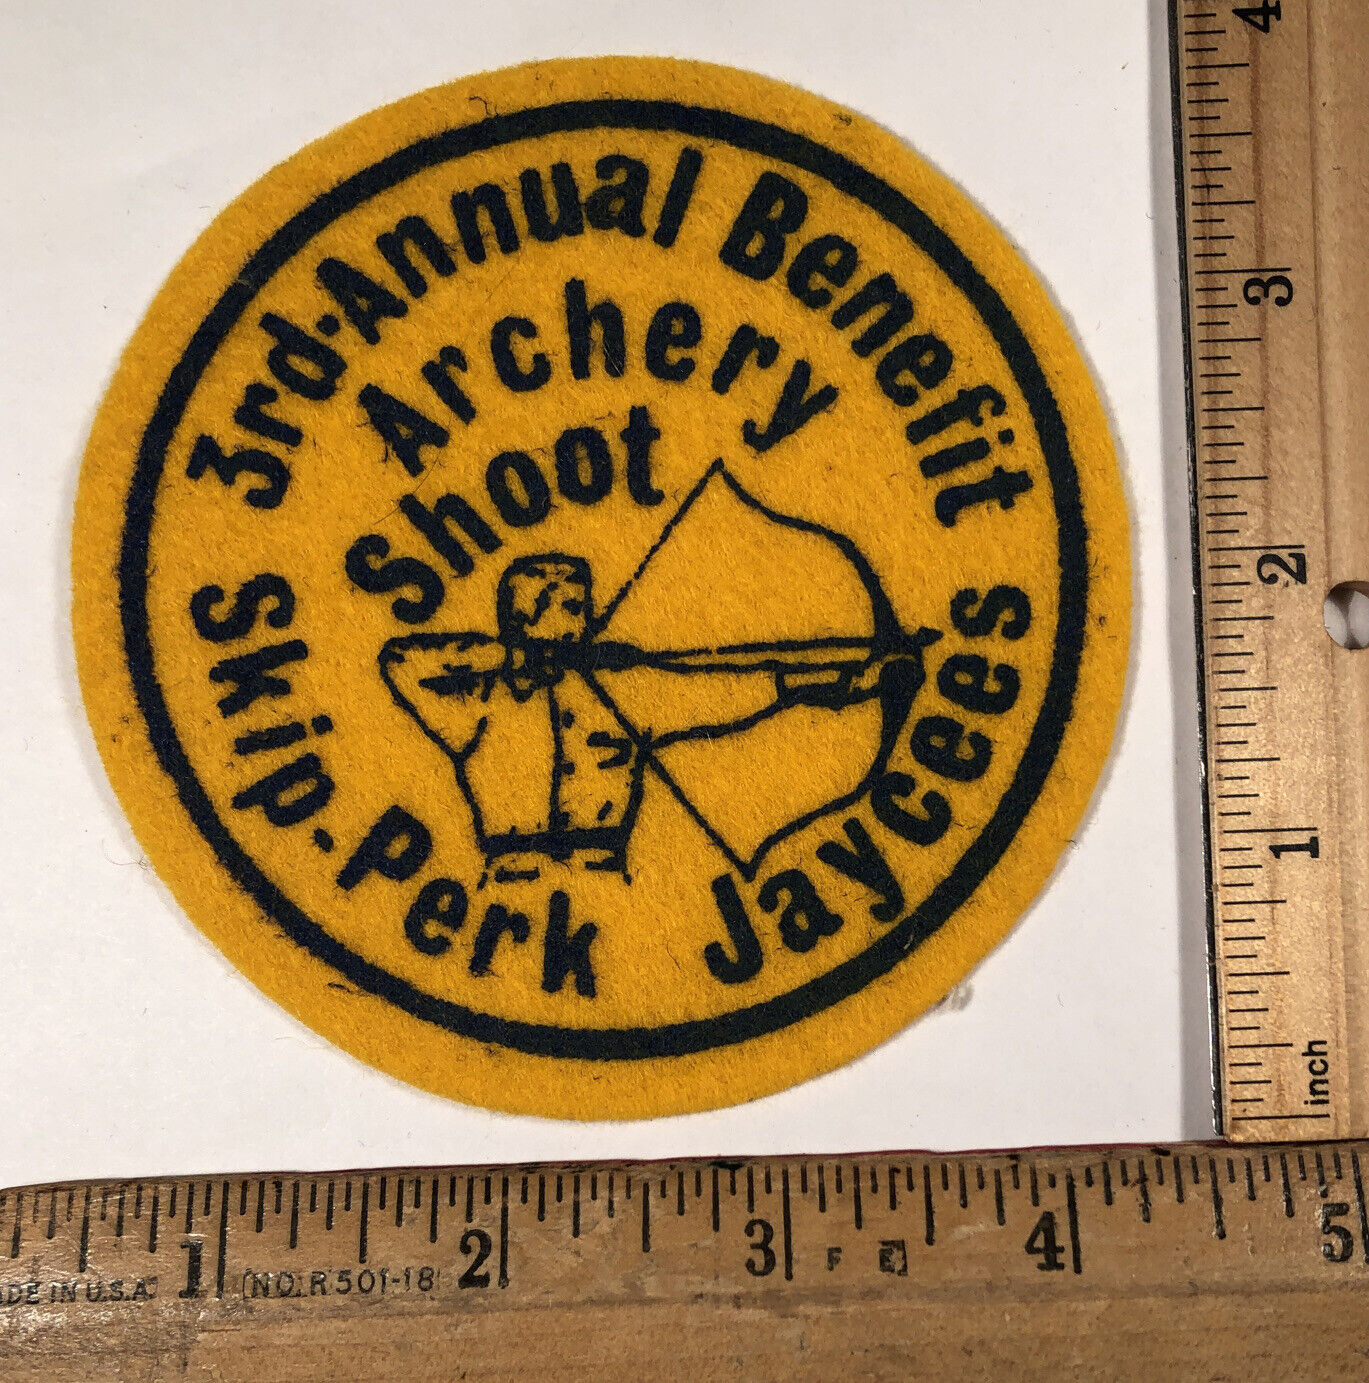 Vintage 3rd Annual Archery Shoot Skip-perk Jaycees Club Felt Patch Trappe Pa